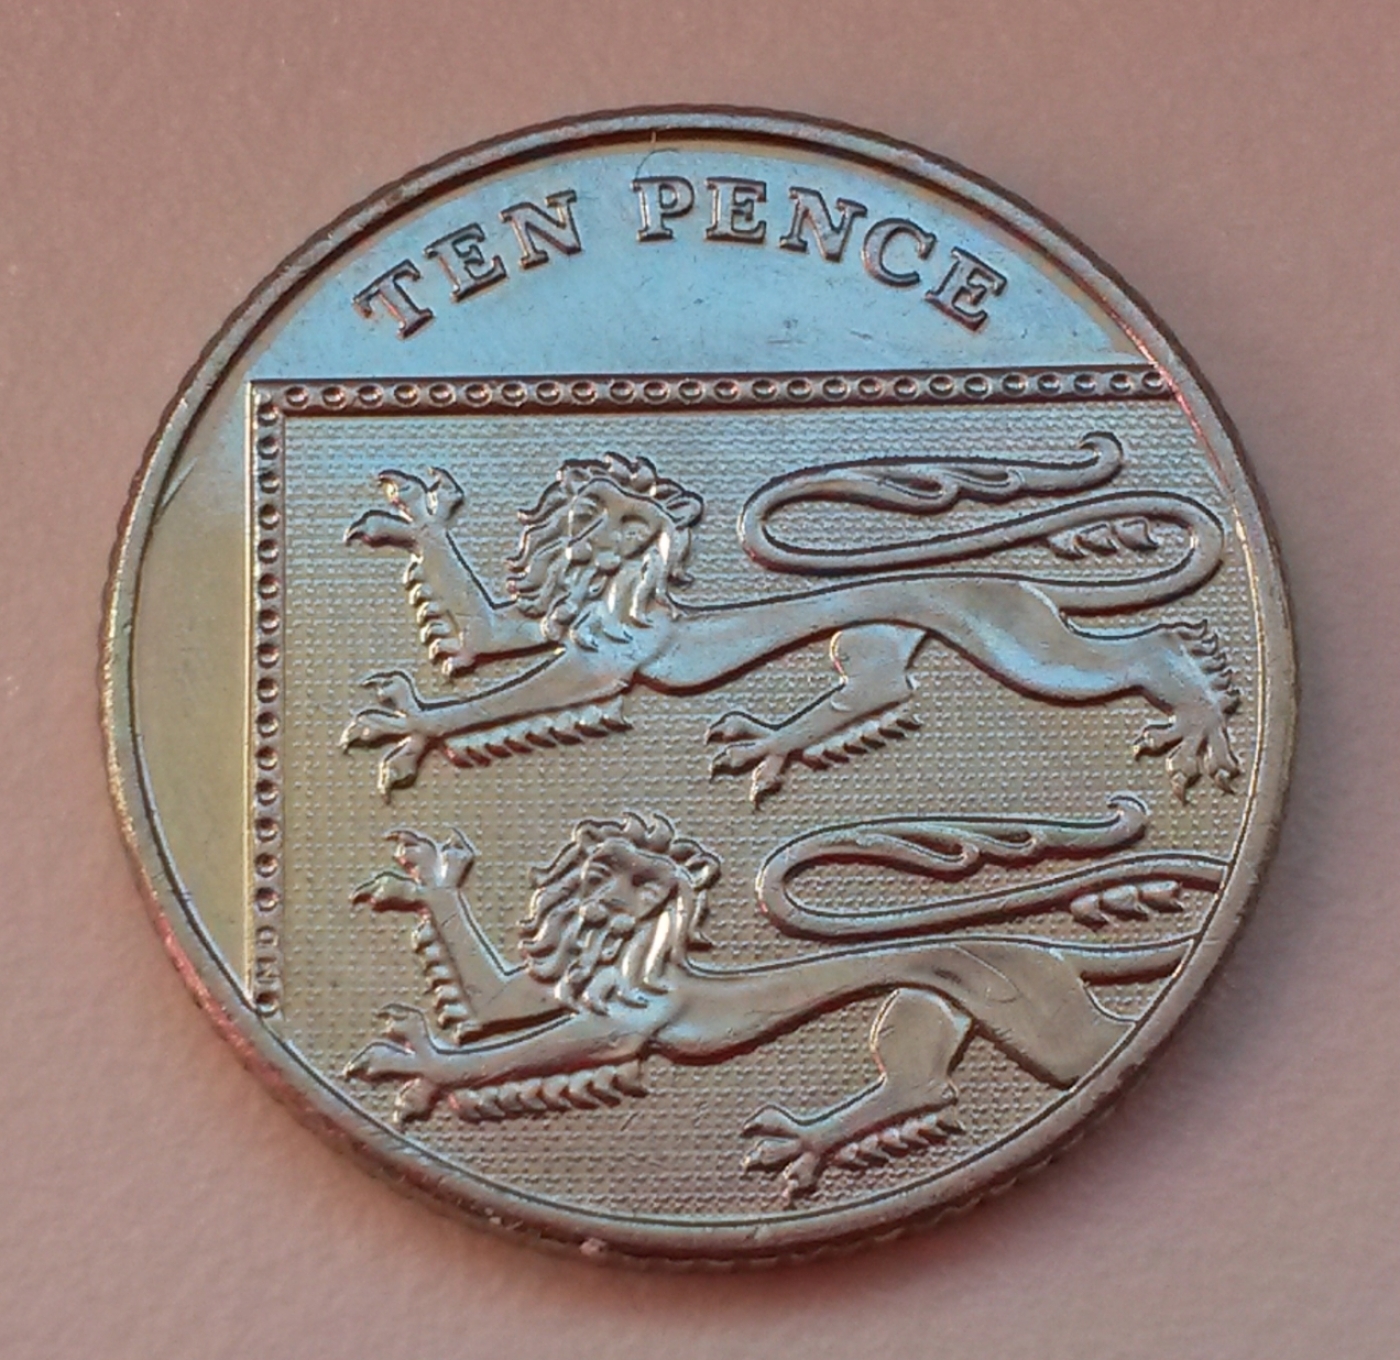 10 Pence 2015, Elizabeth II (1952-present) - Great Britain - Coin - 36749